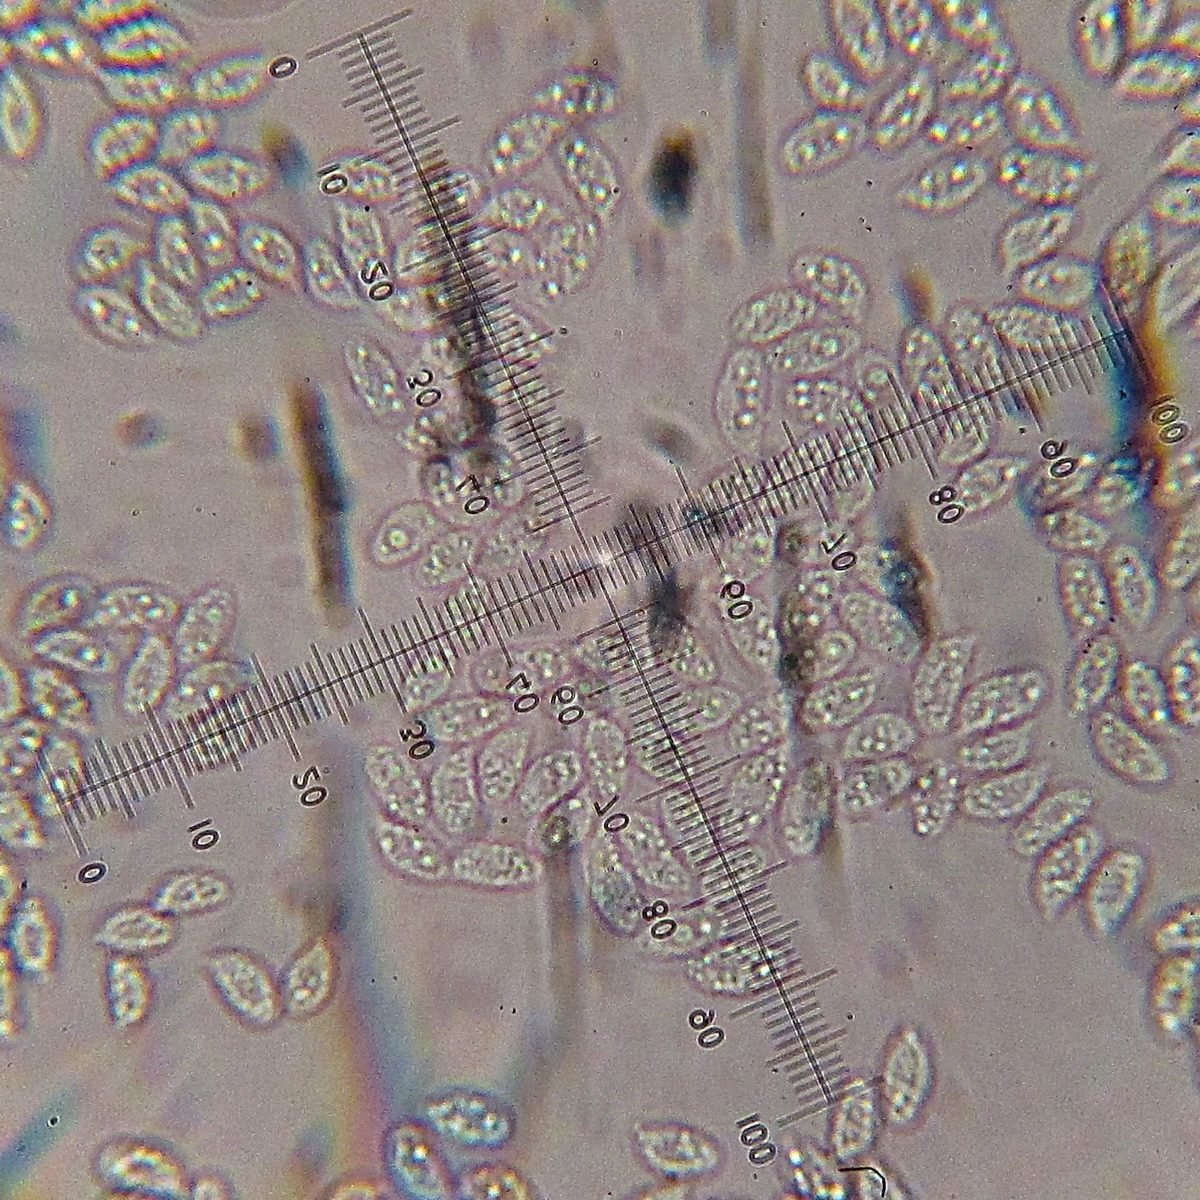 hromozera sineplastinkovaya chromosera cyanophylla 603980319a1d8 - Хромозера синепластинковая (Chromosera cyanophylla)